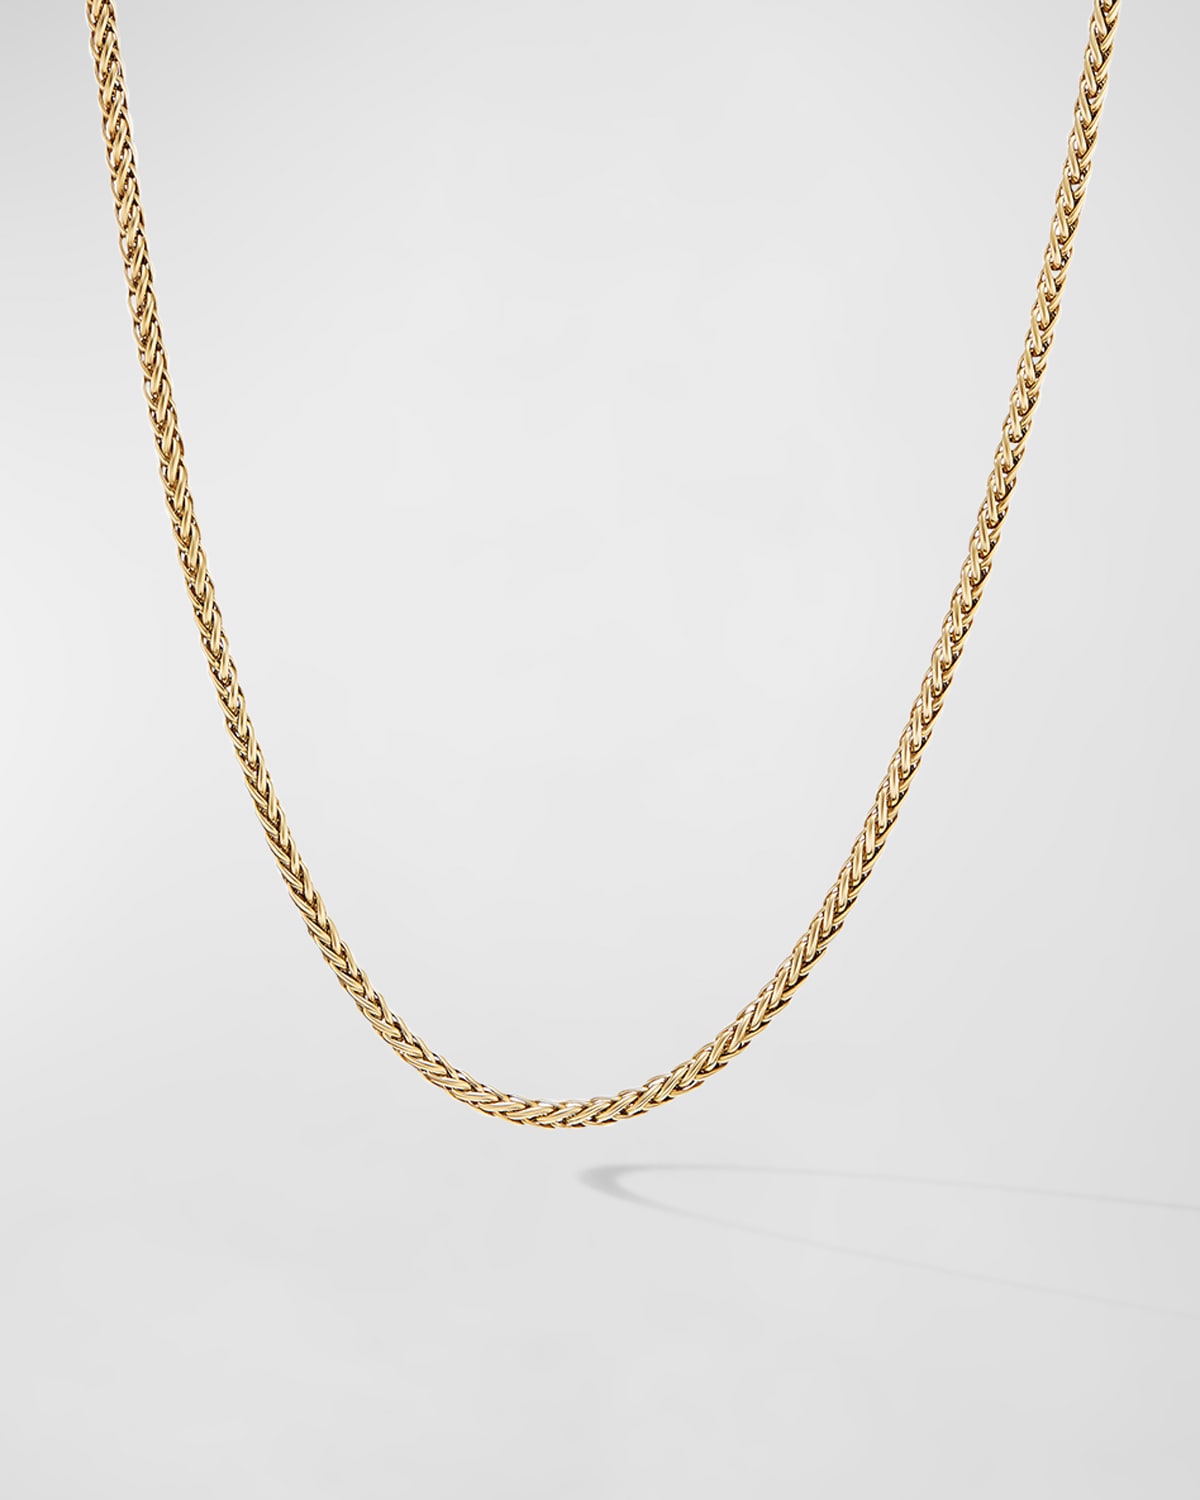 David Yurman Men's Wheat Chain Necklace in 18K Gold, 2.5mm, 20"L